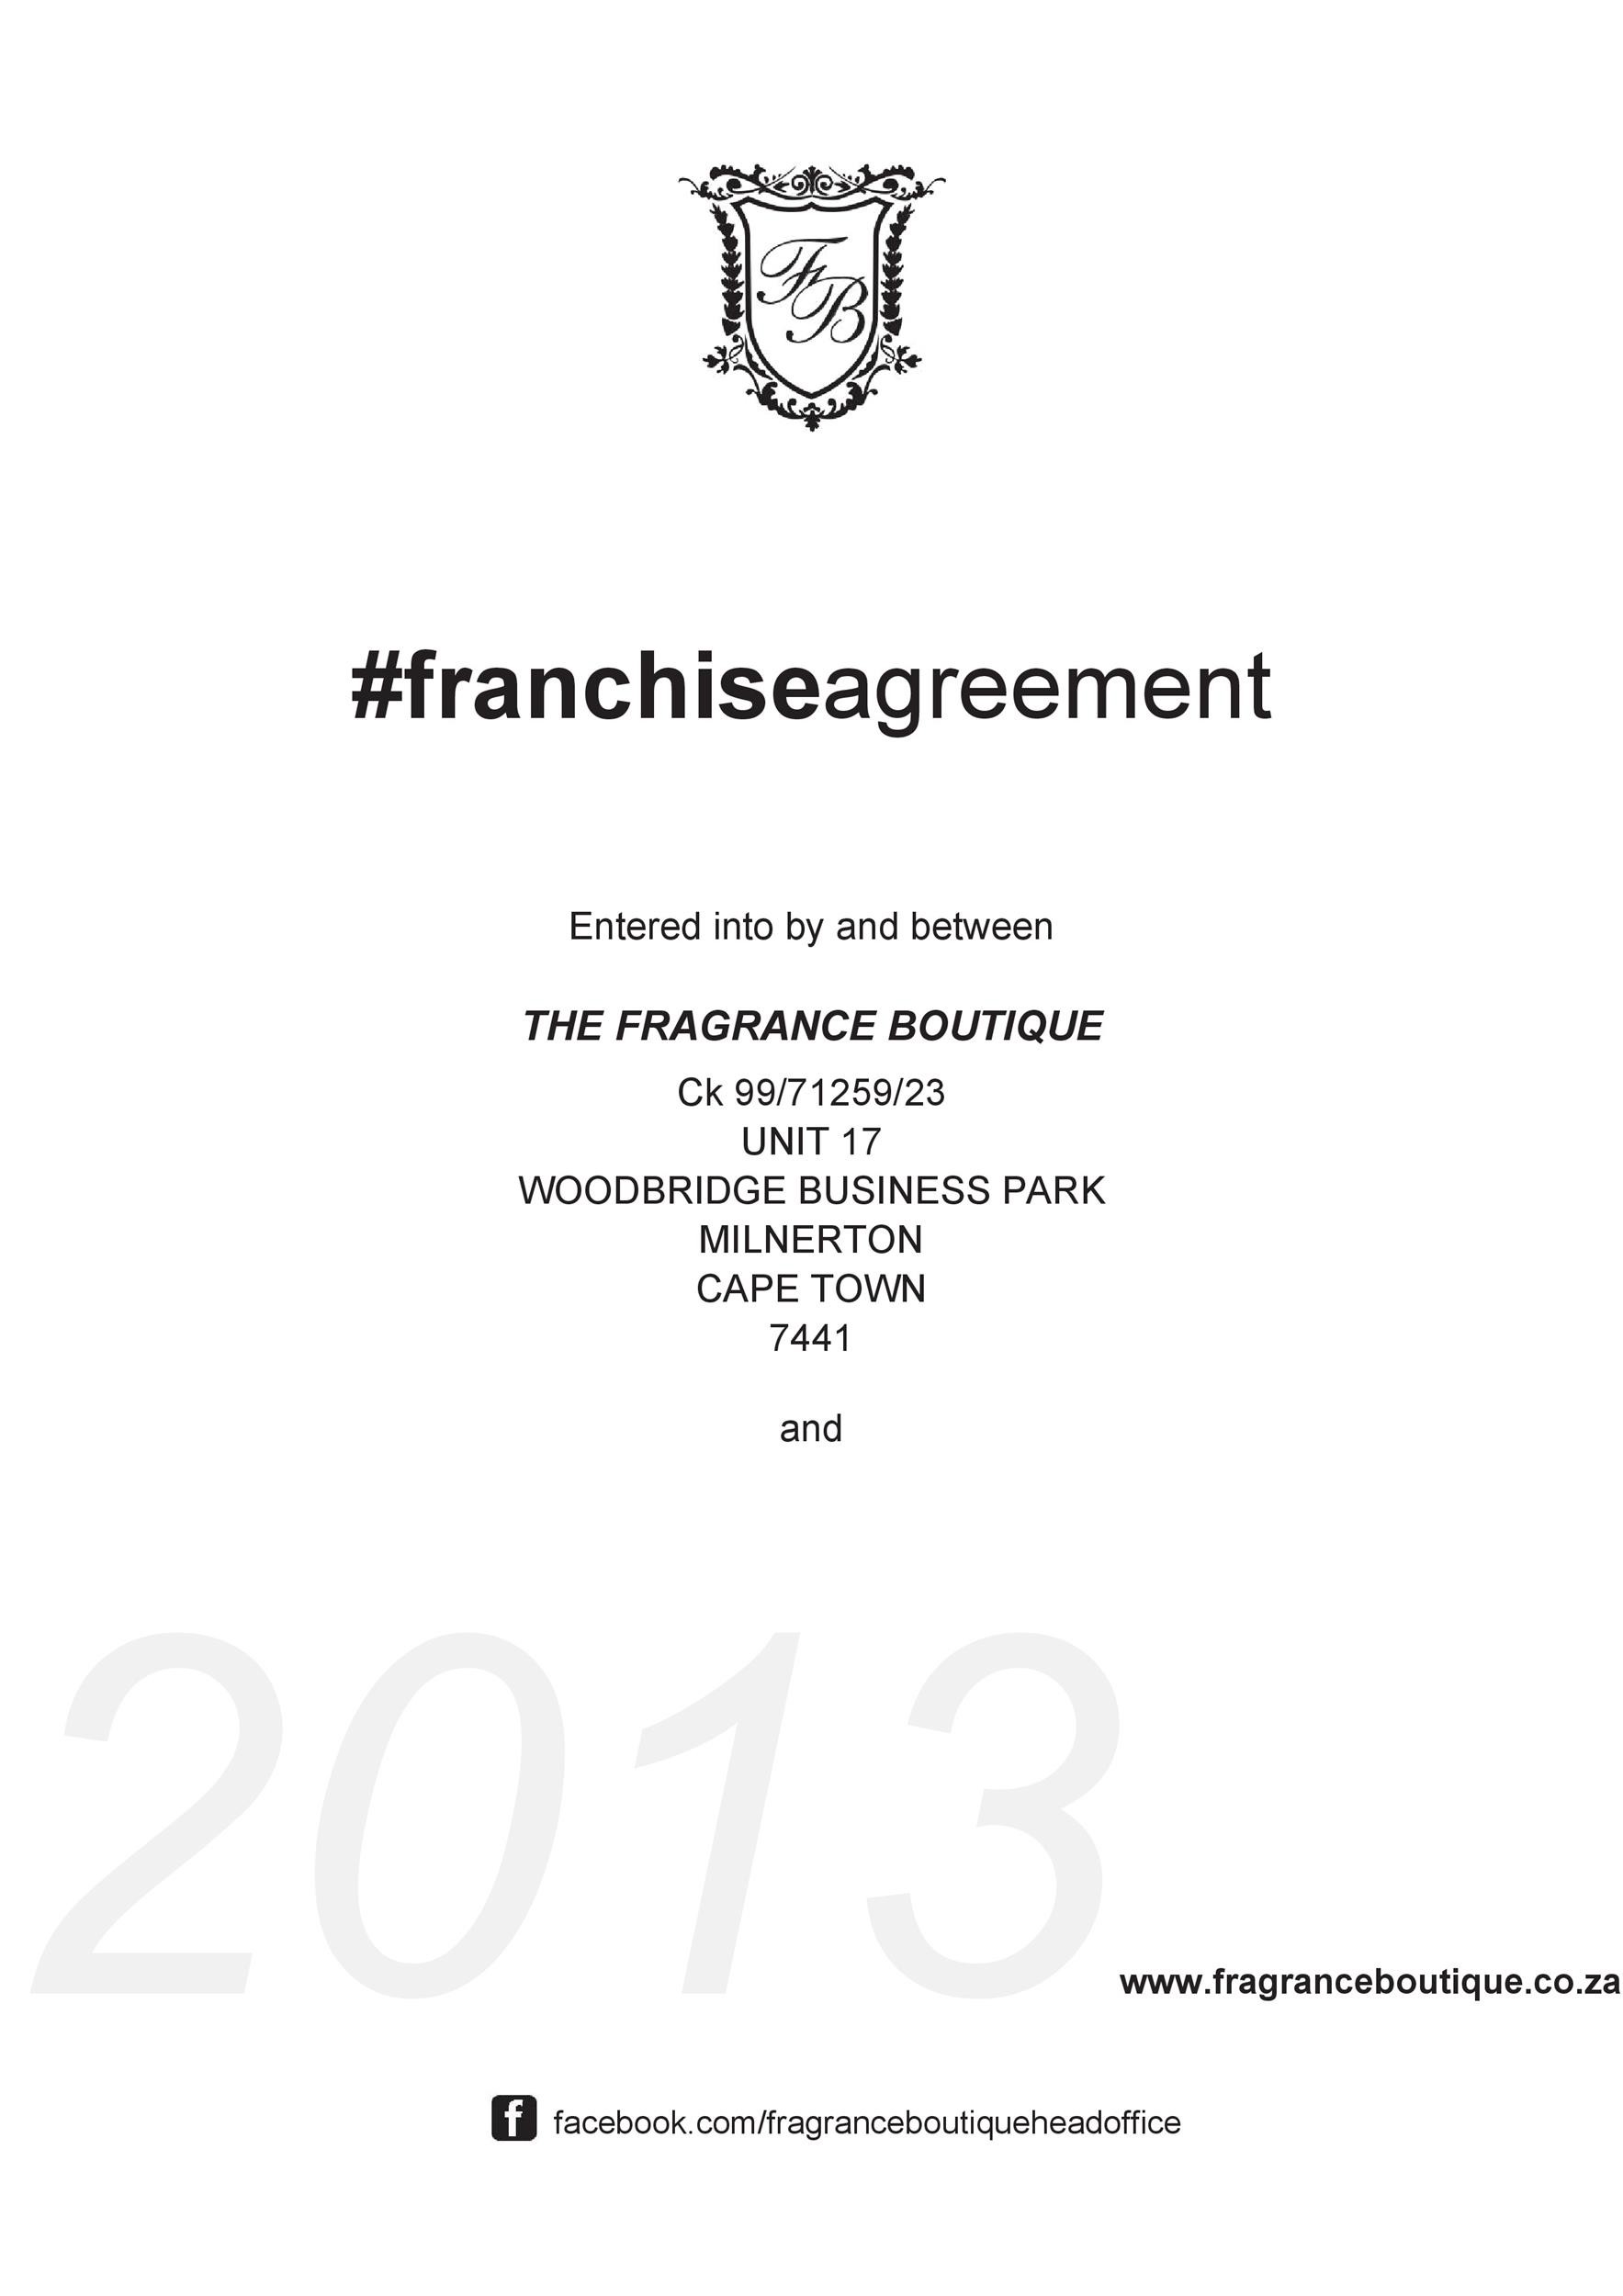 Free franchise agreement 25